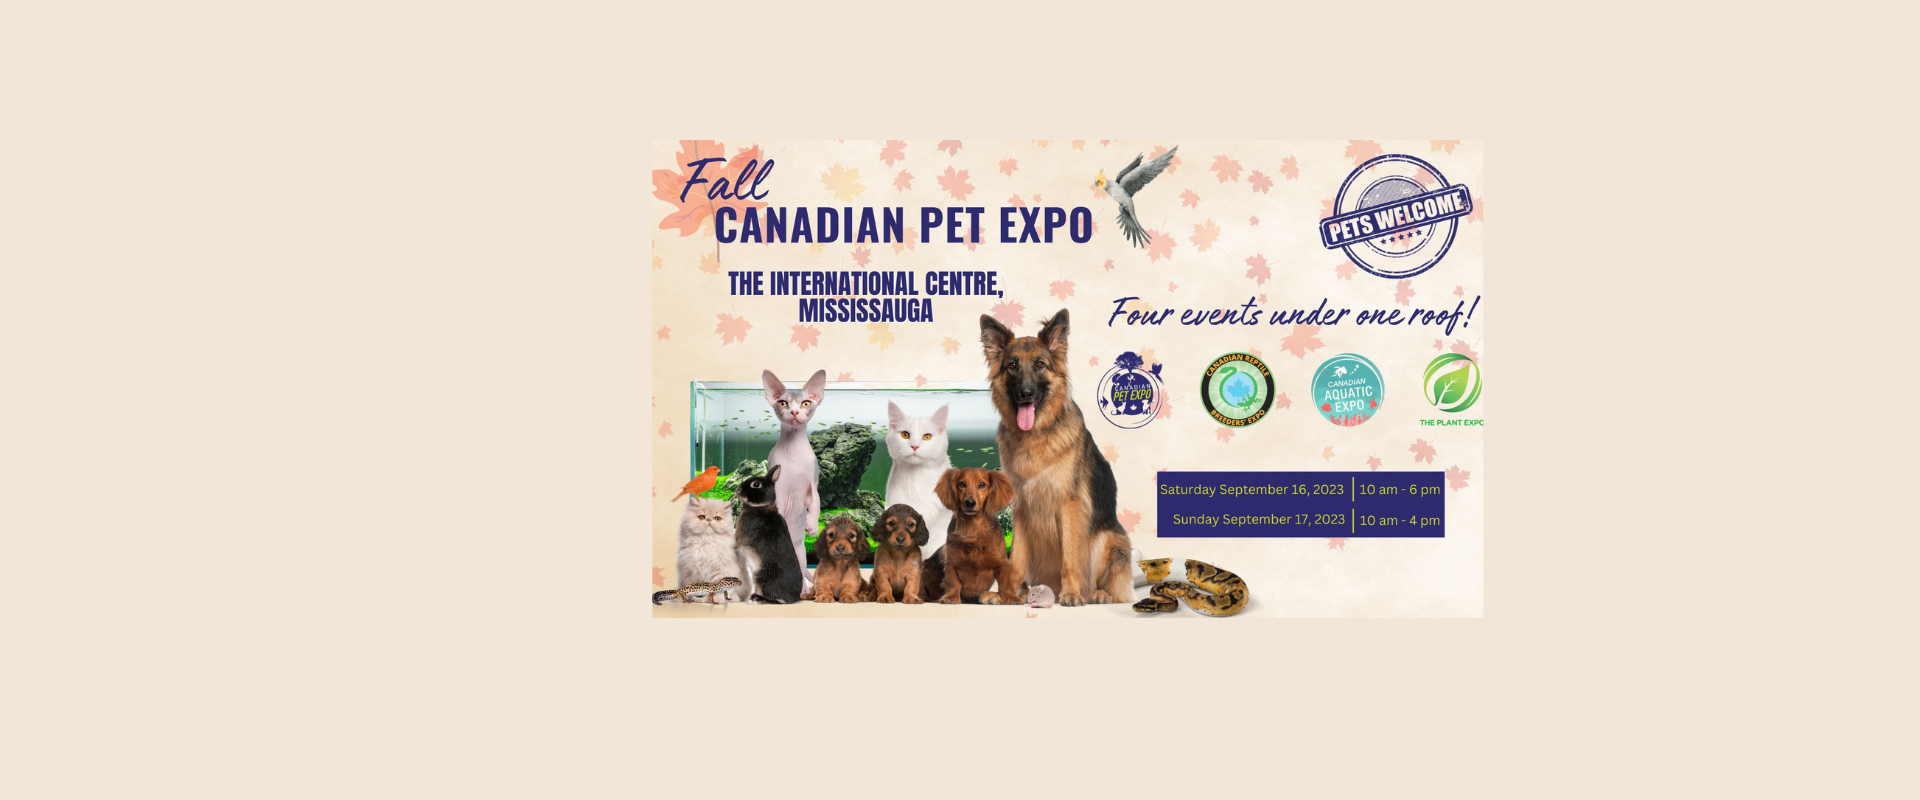 Fall Canadian Pet Expo